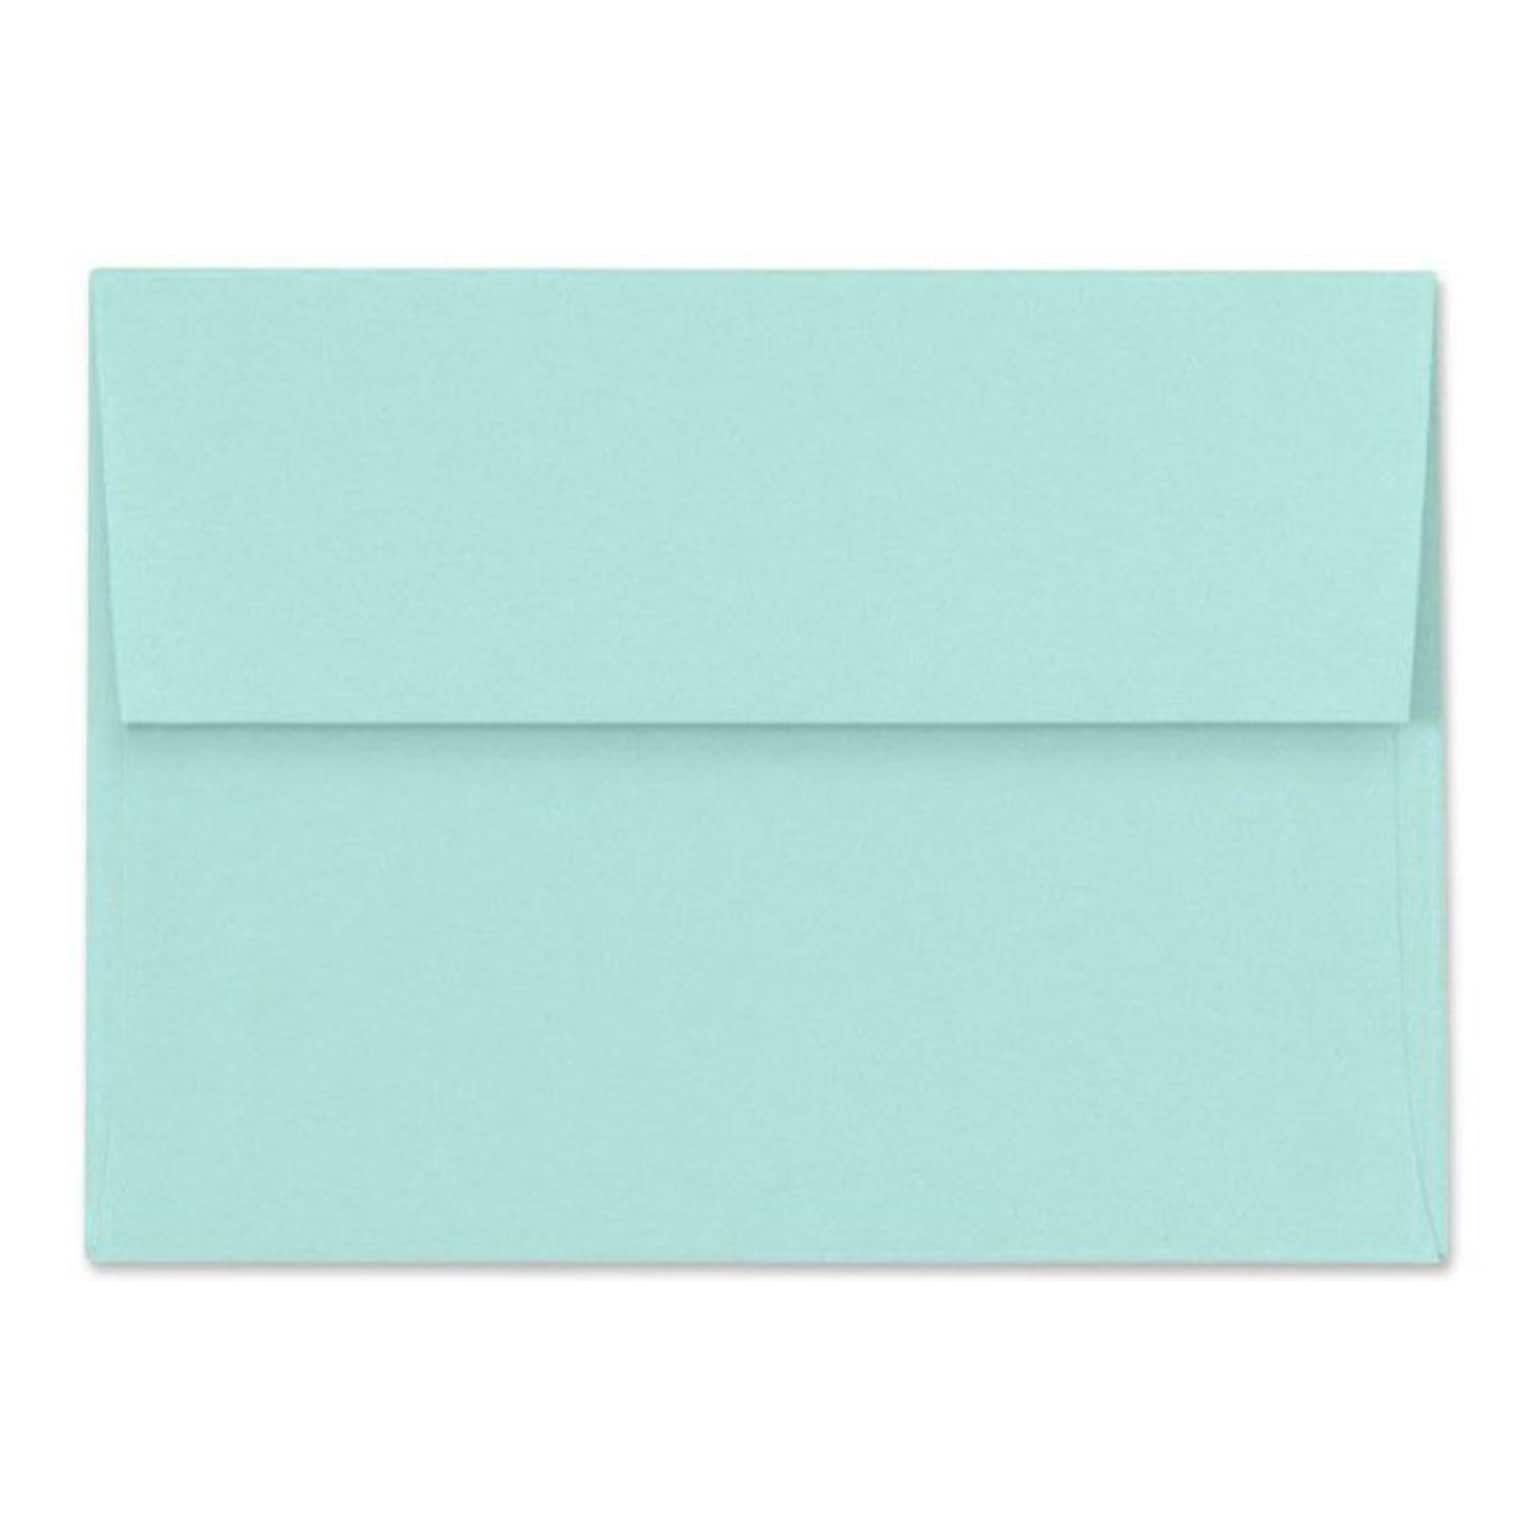 LUX A1 Invitation Envelopes (3 5/8 x 5 1/8) 50/Box, Seafoam (LUX-4865-113-50)